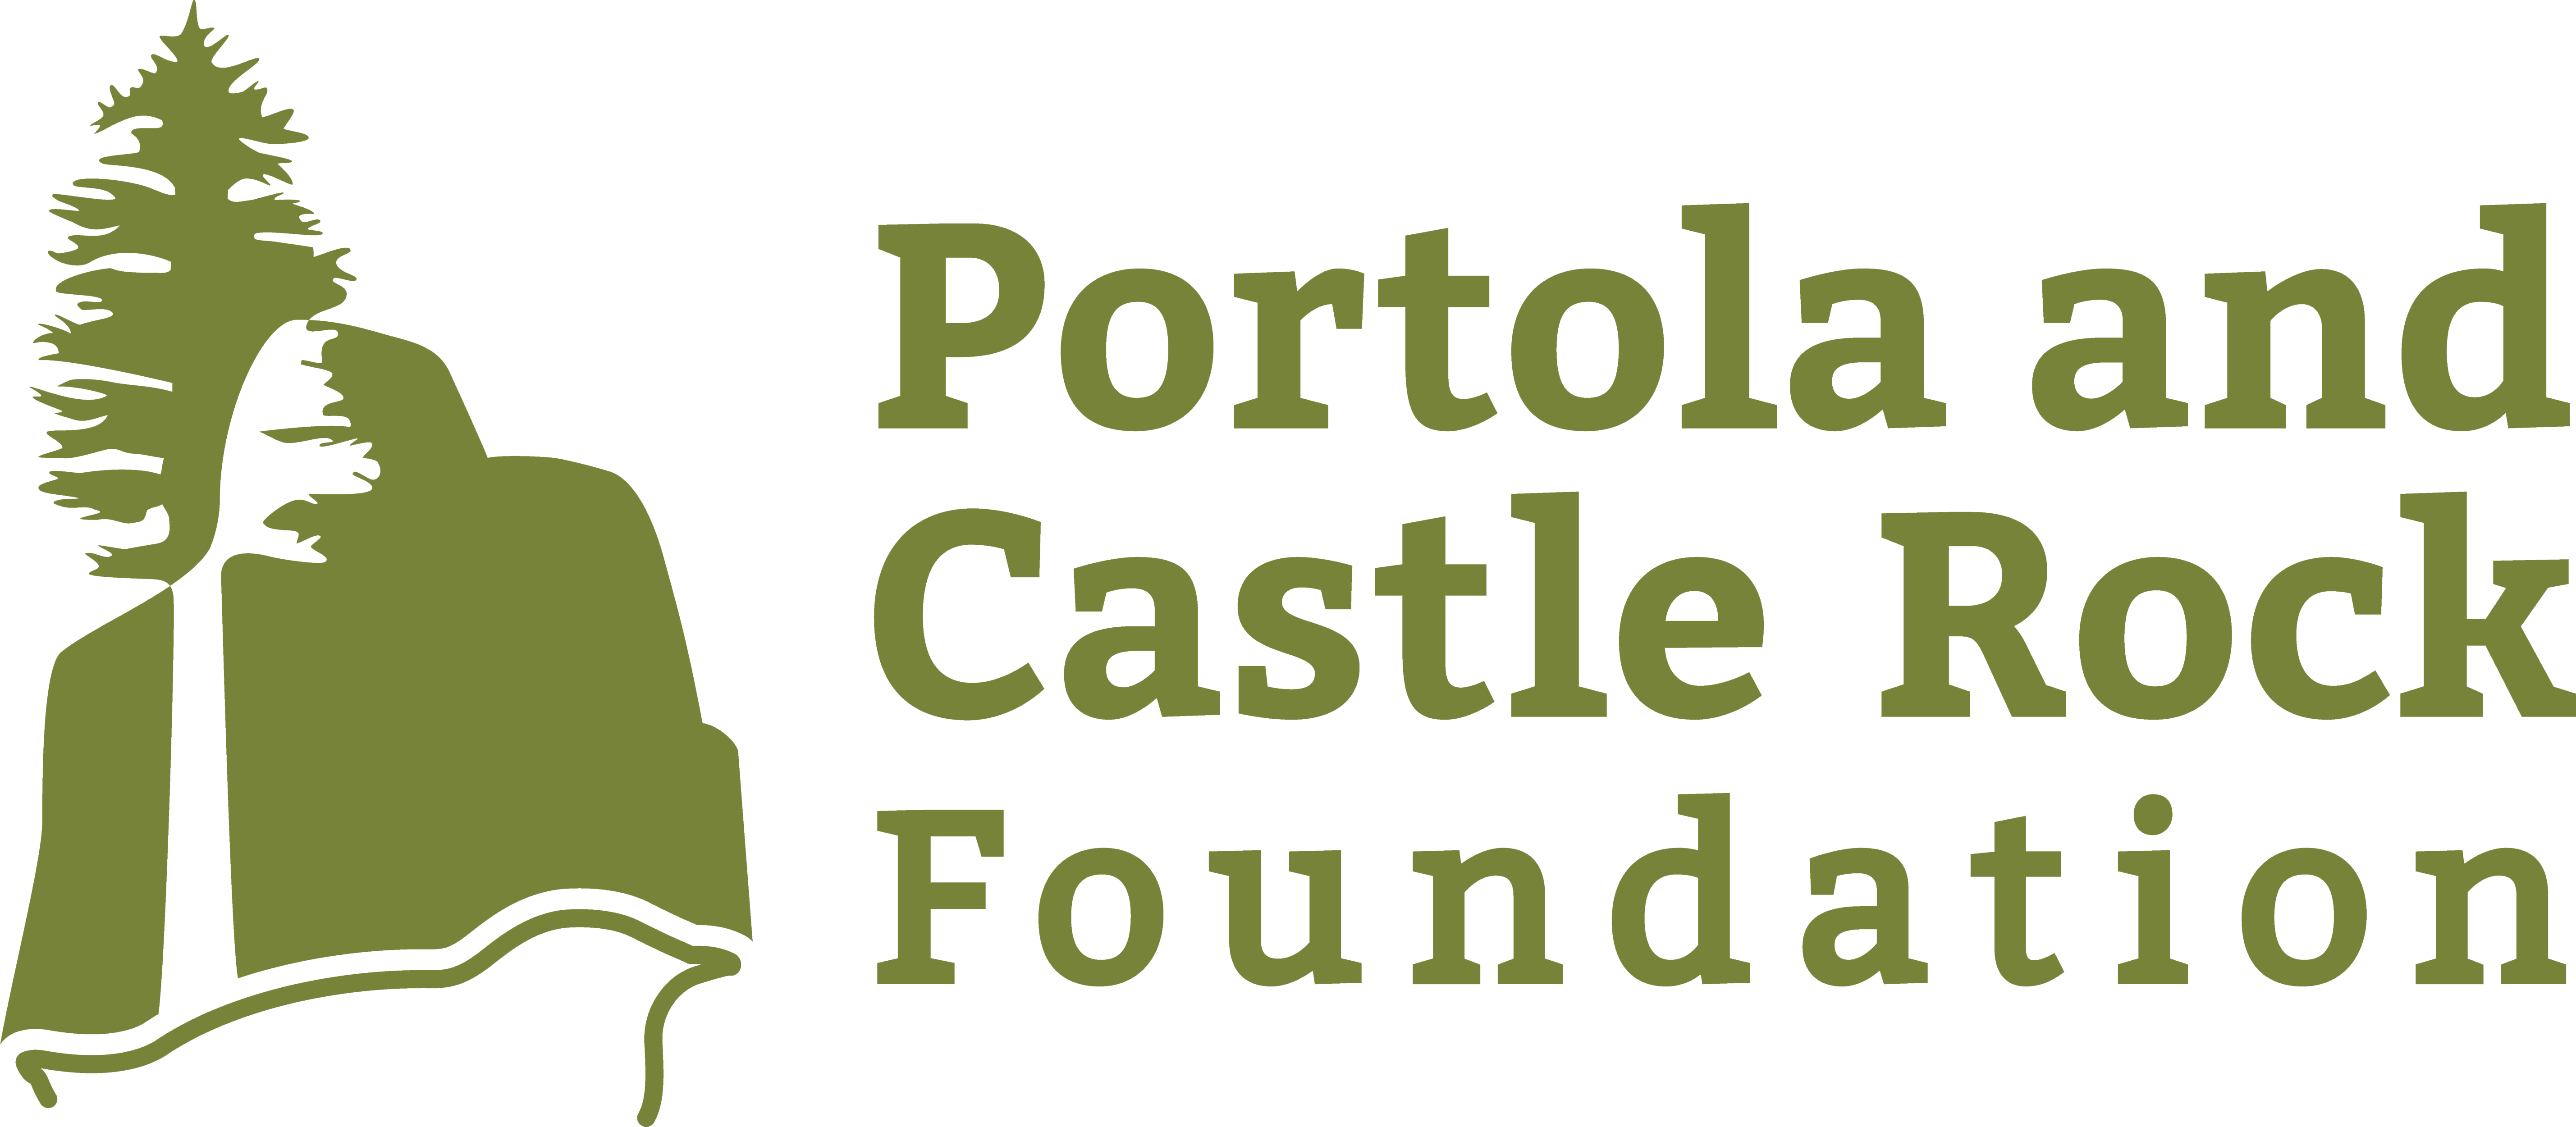 Portola and Castle Rock Foundation